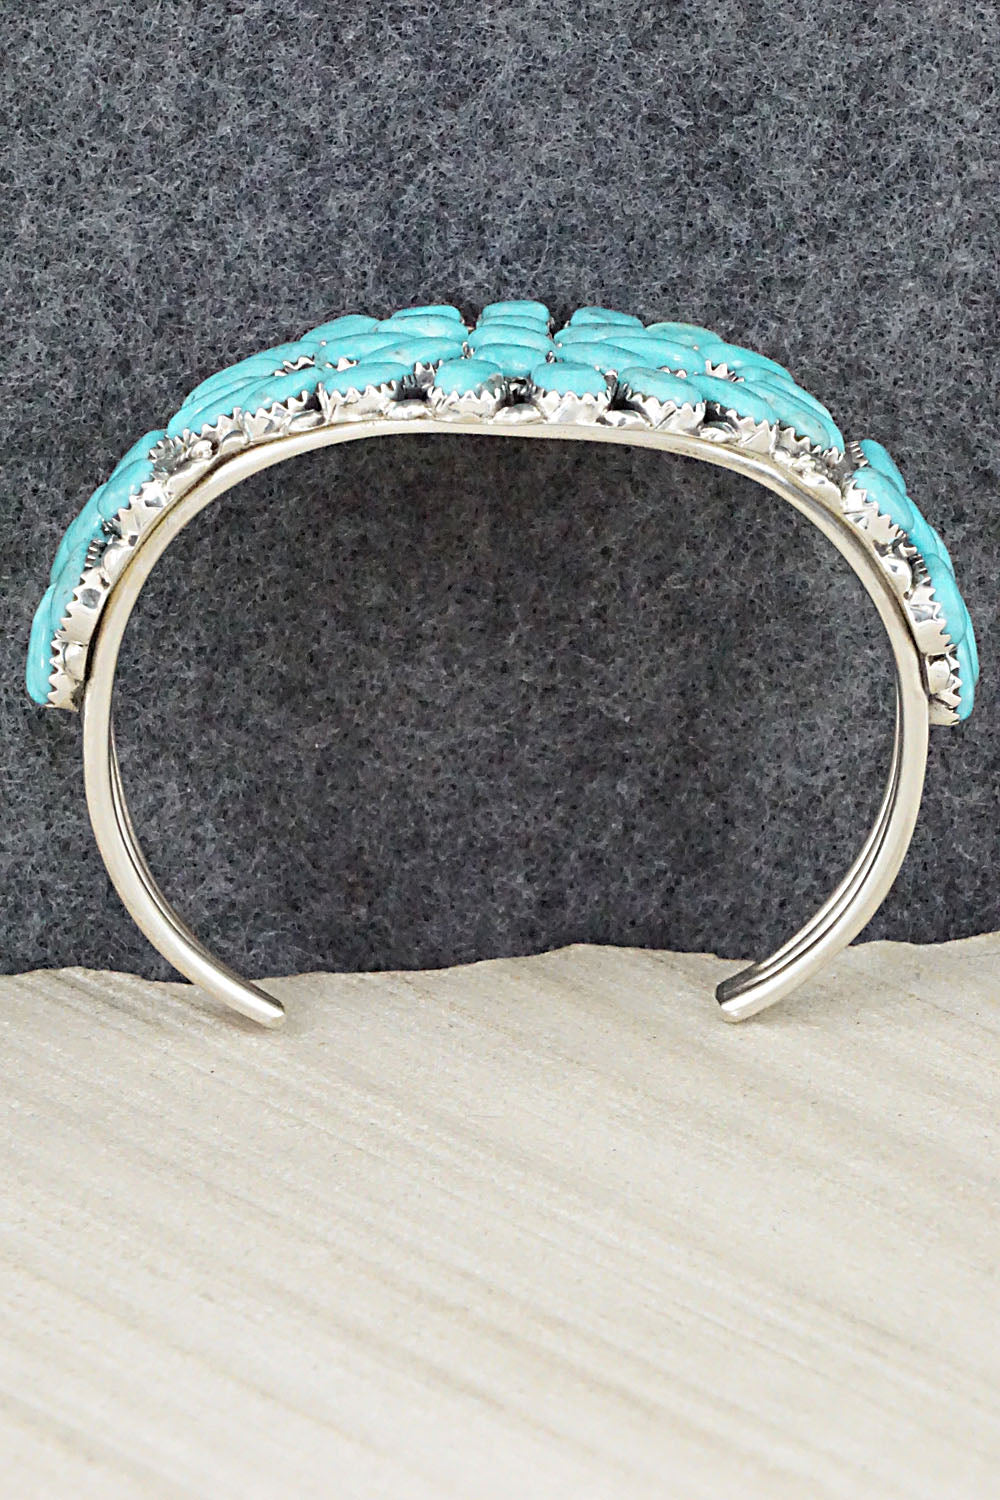 Turquoise & Sterling Silver Bracelet - Jesse Williams